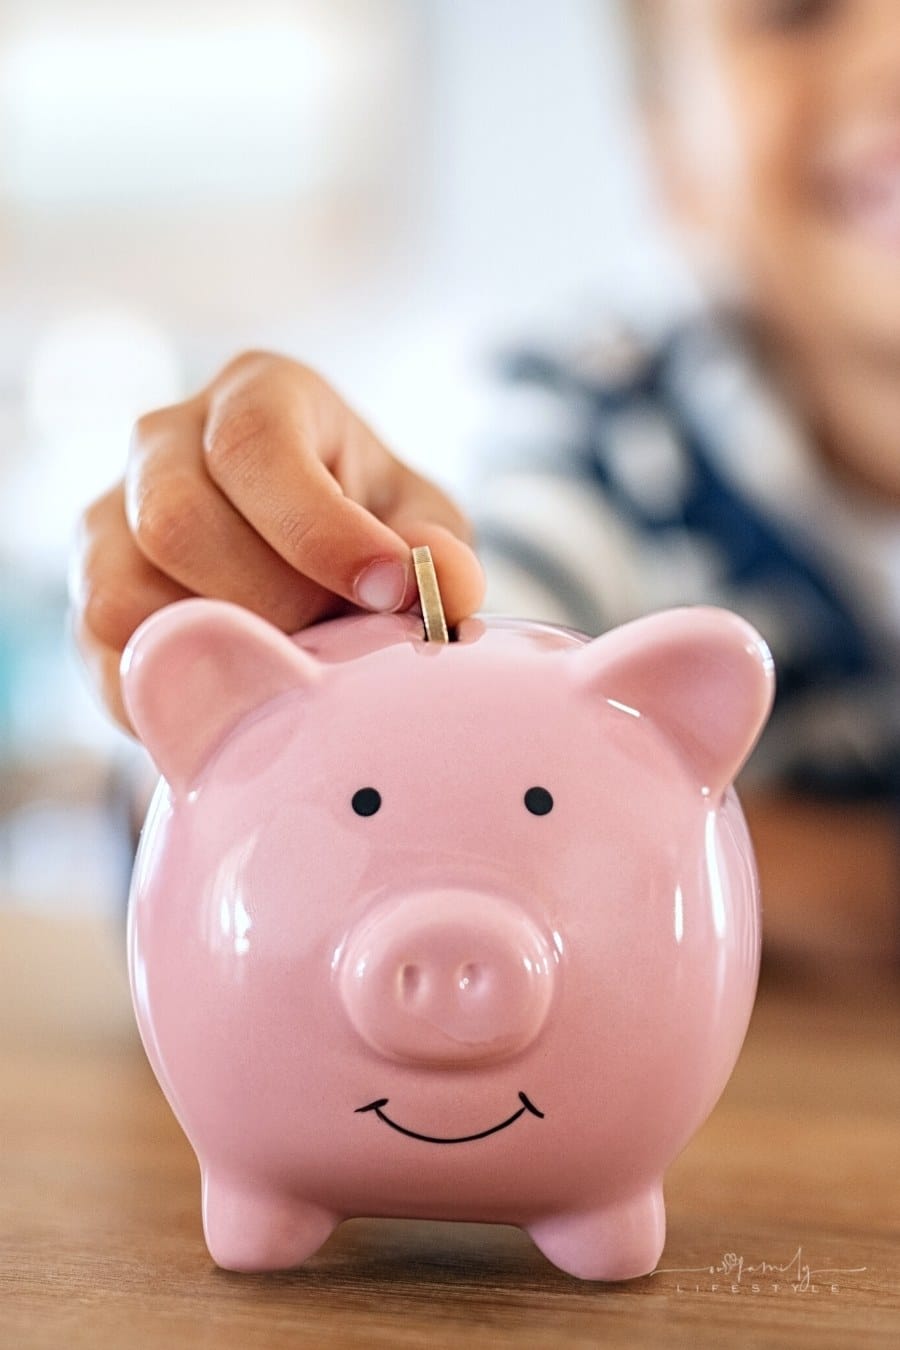 child saving money in pink piggy bank